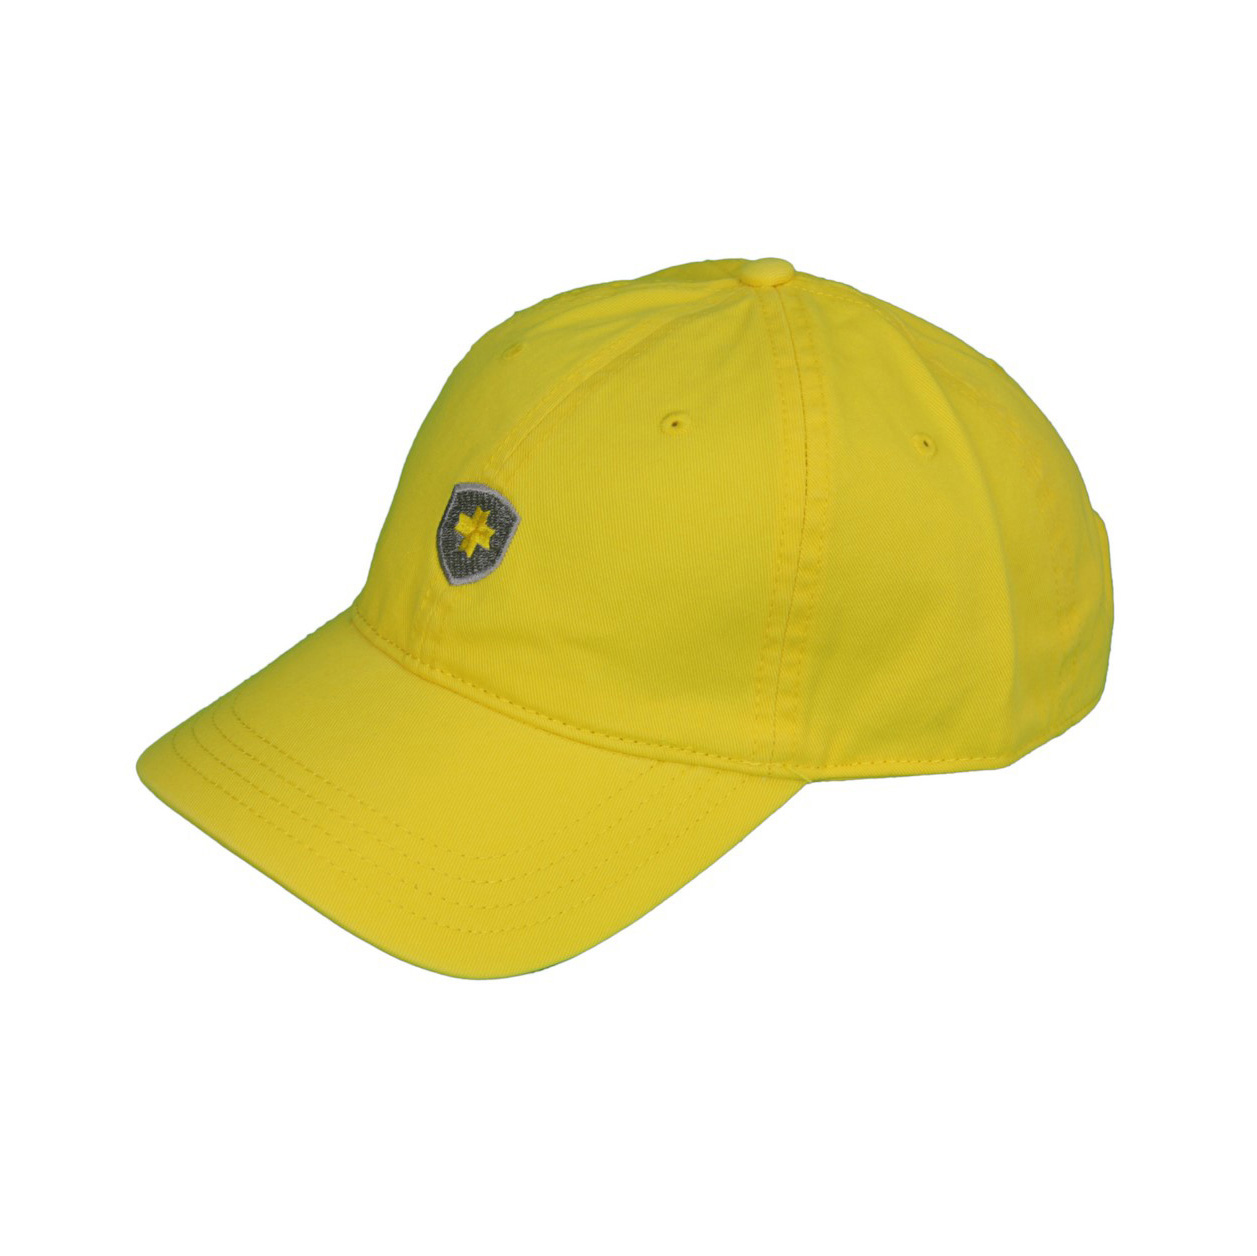 Wellensteyn Baseball Cap Kappe Pastell gelb PBSC 198 pastell yellow